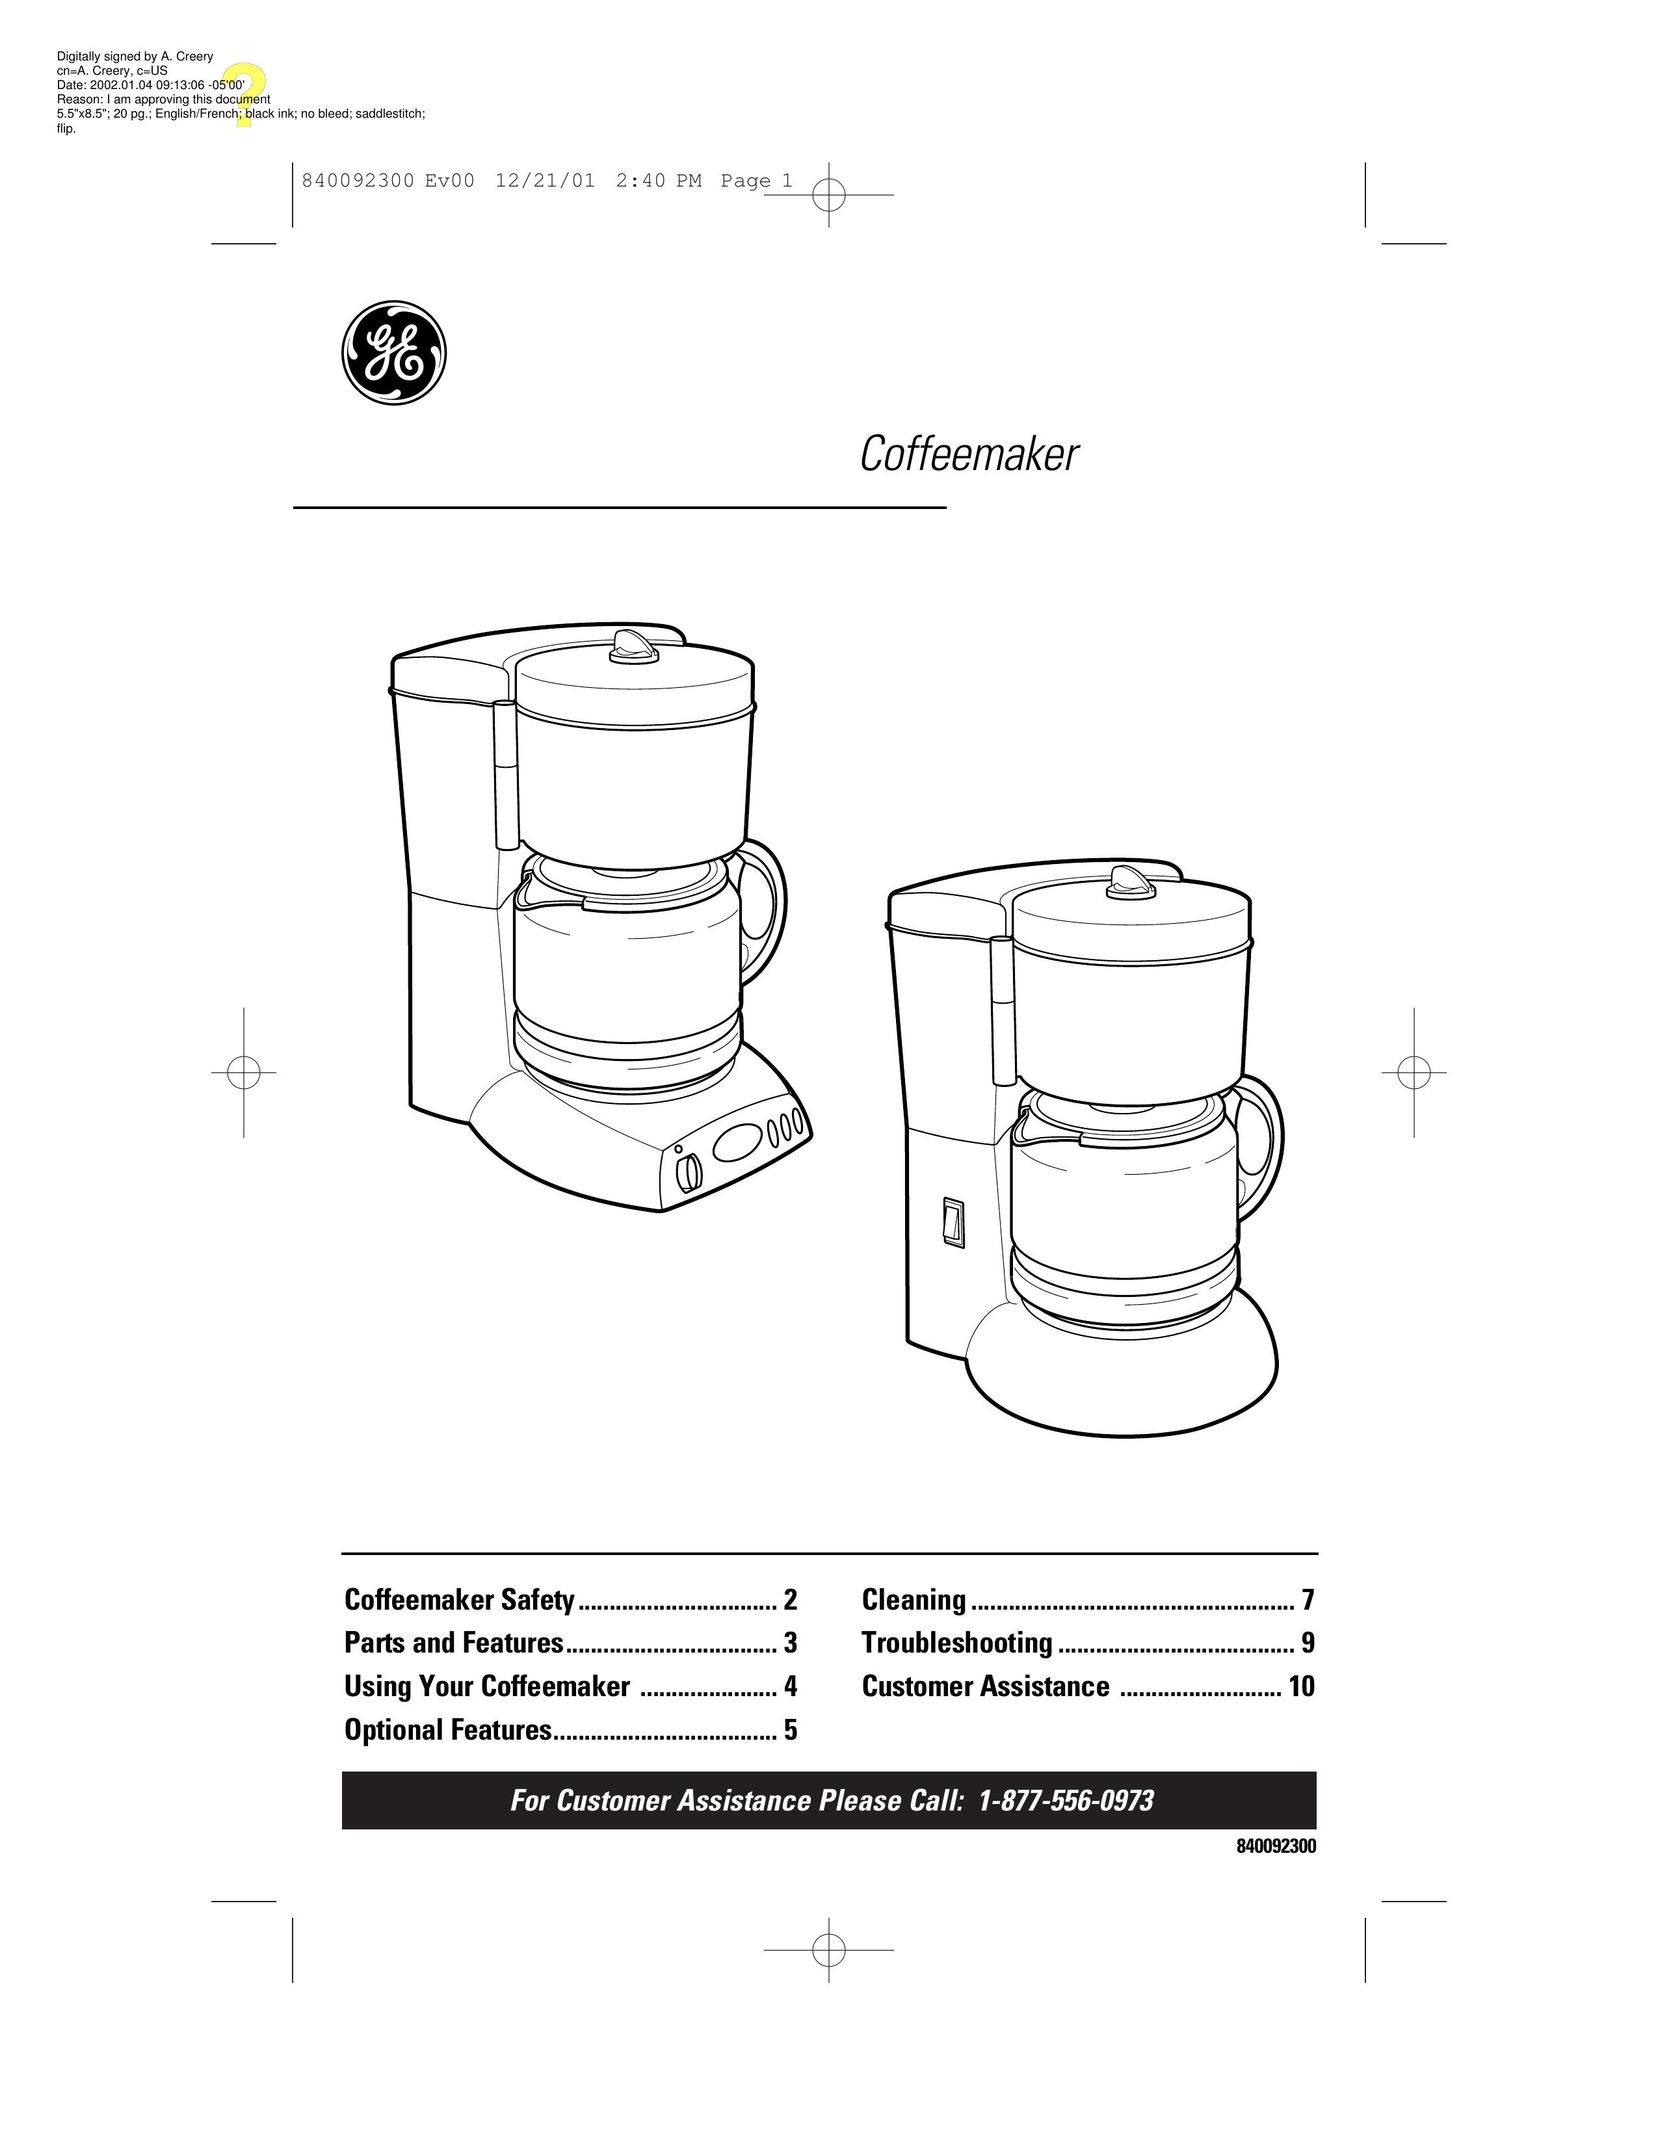 GE 106804 Coffeemaker User Manual